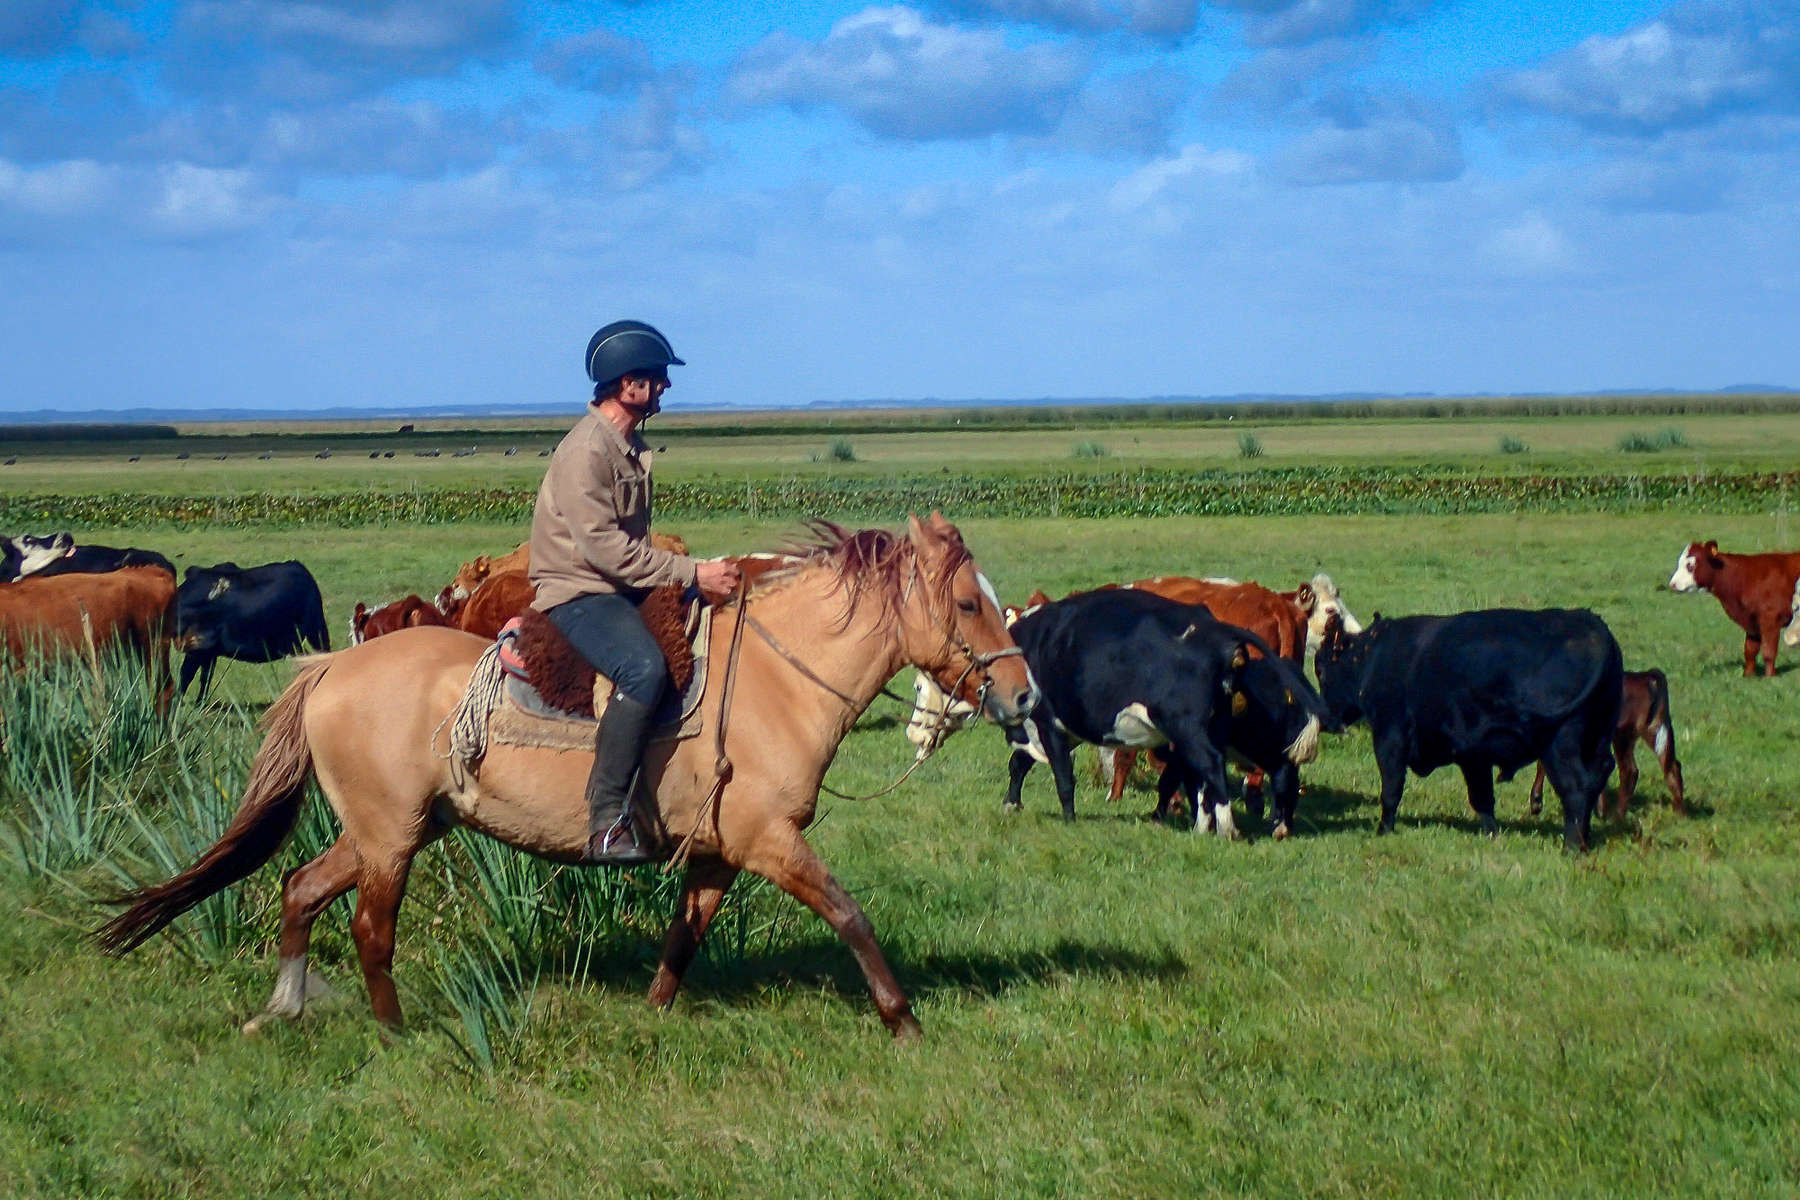 Rider rounding up cattle in Uruguay